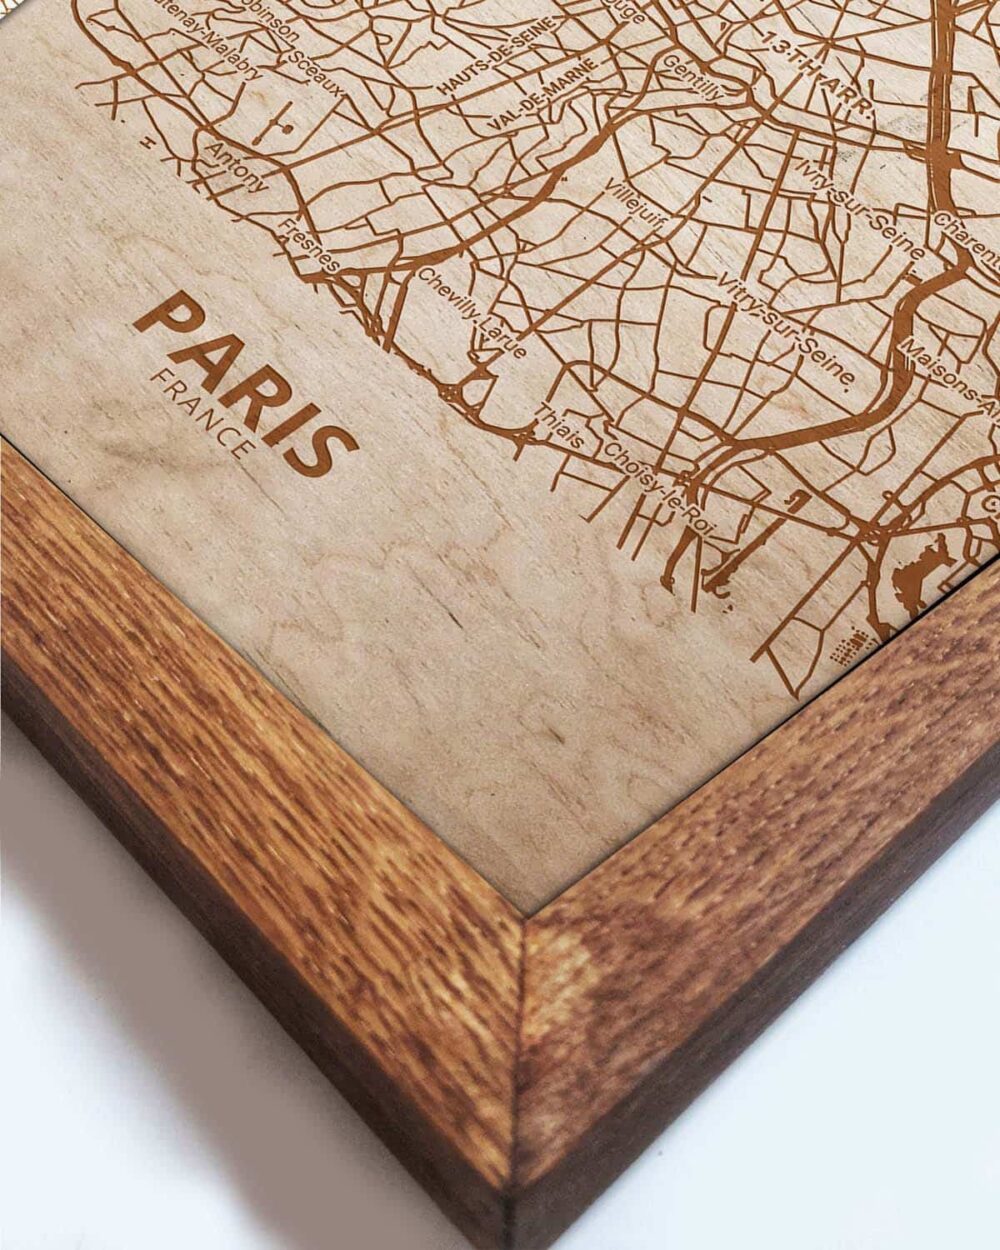 Wooden Street Map of Paris - Urban City Plan 1